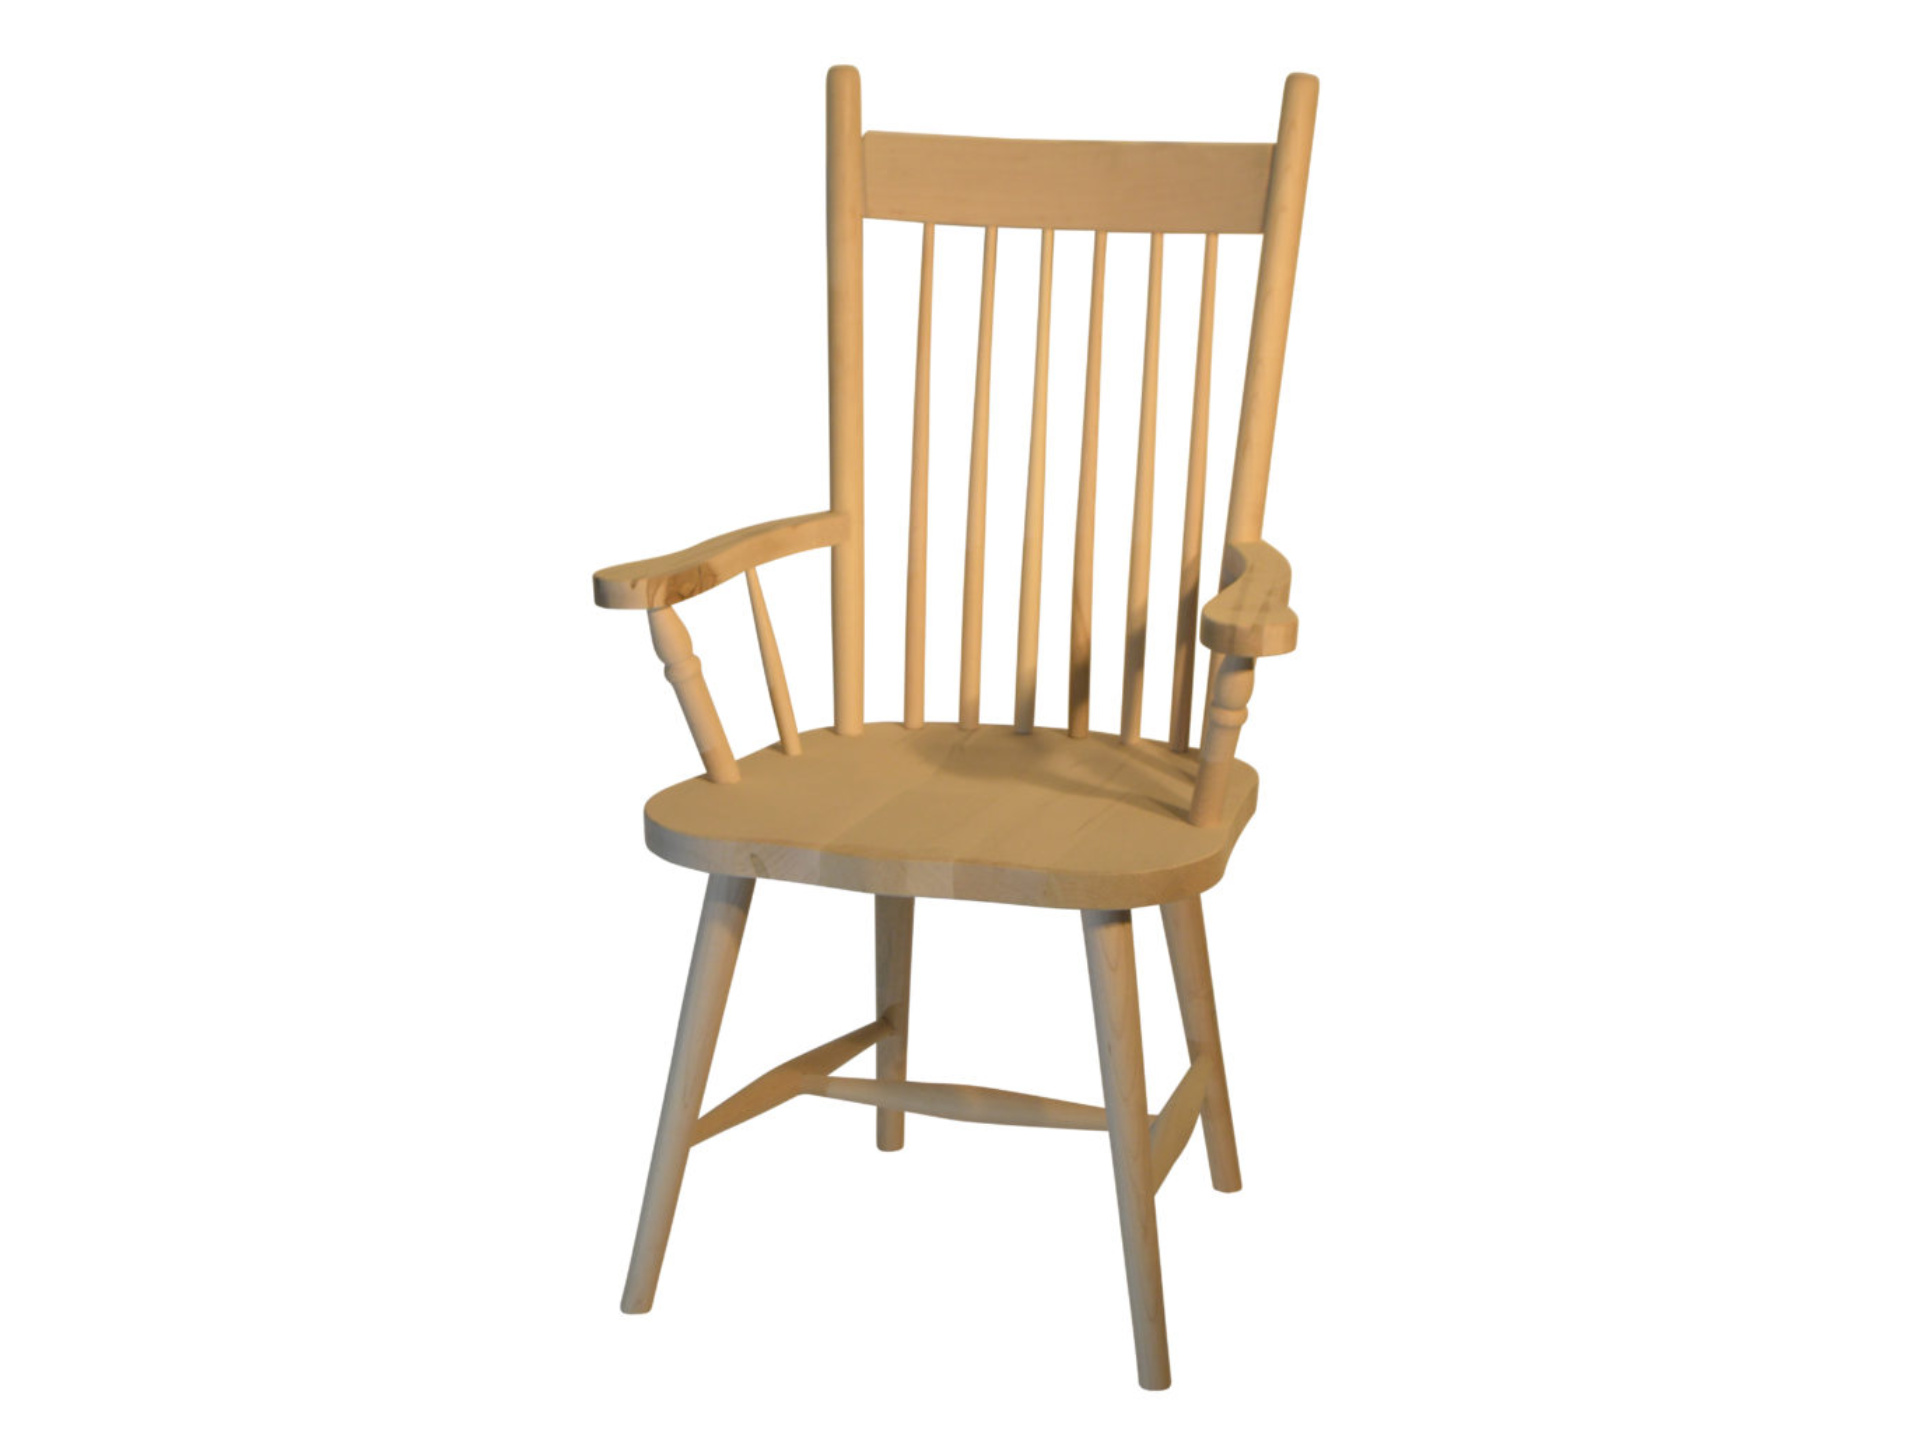 42a. Rustic Arm Chair